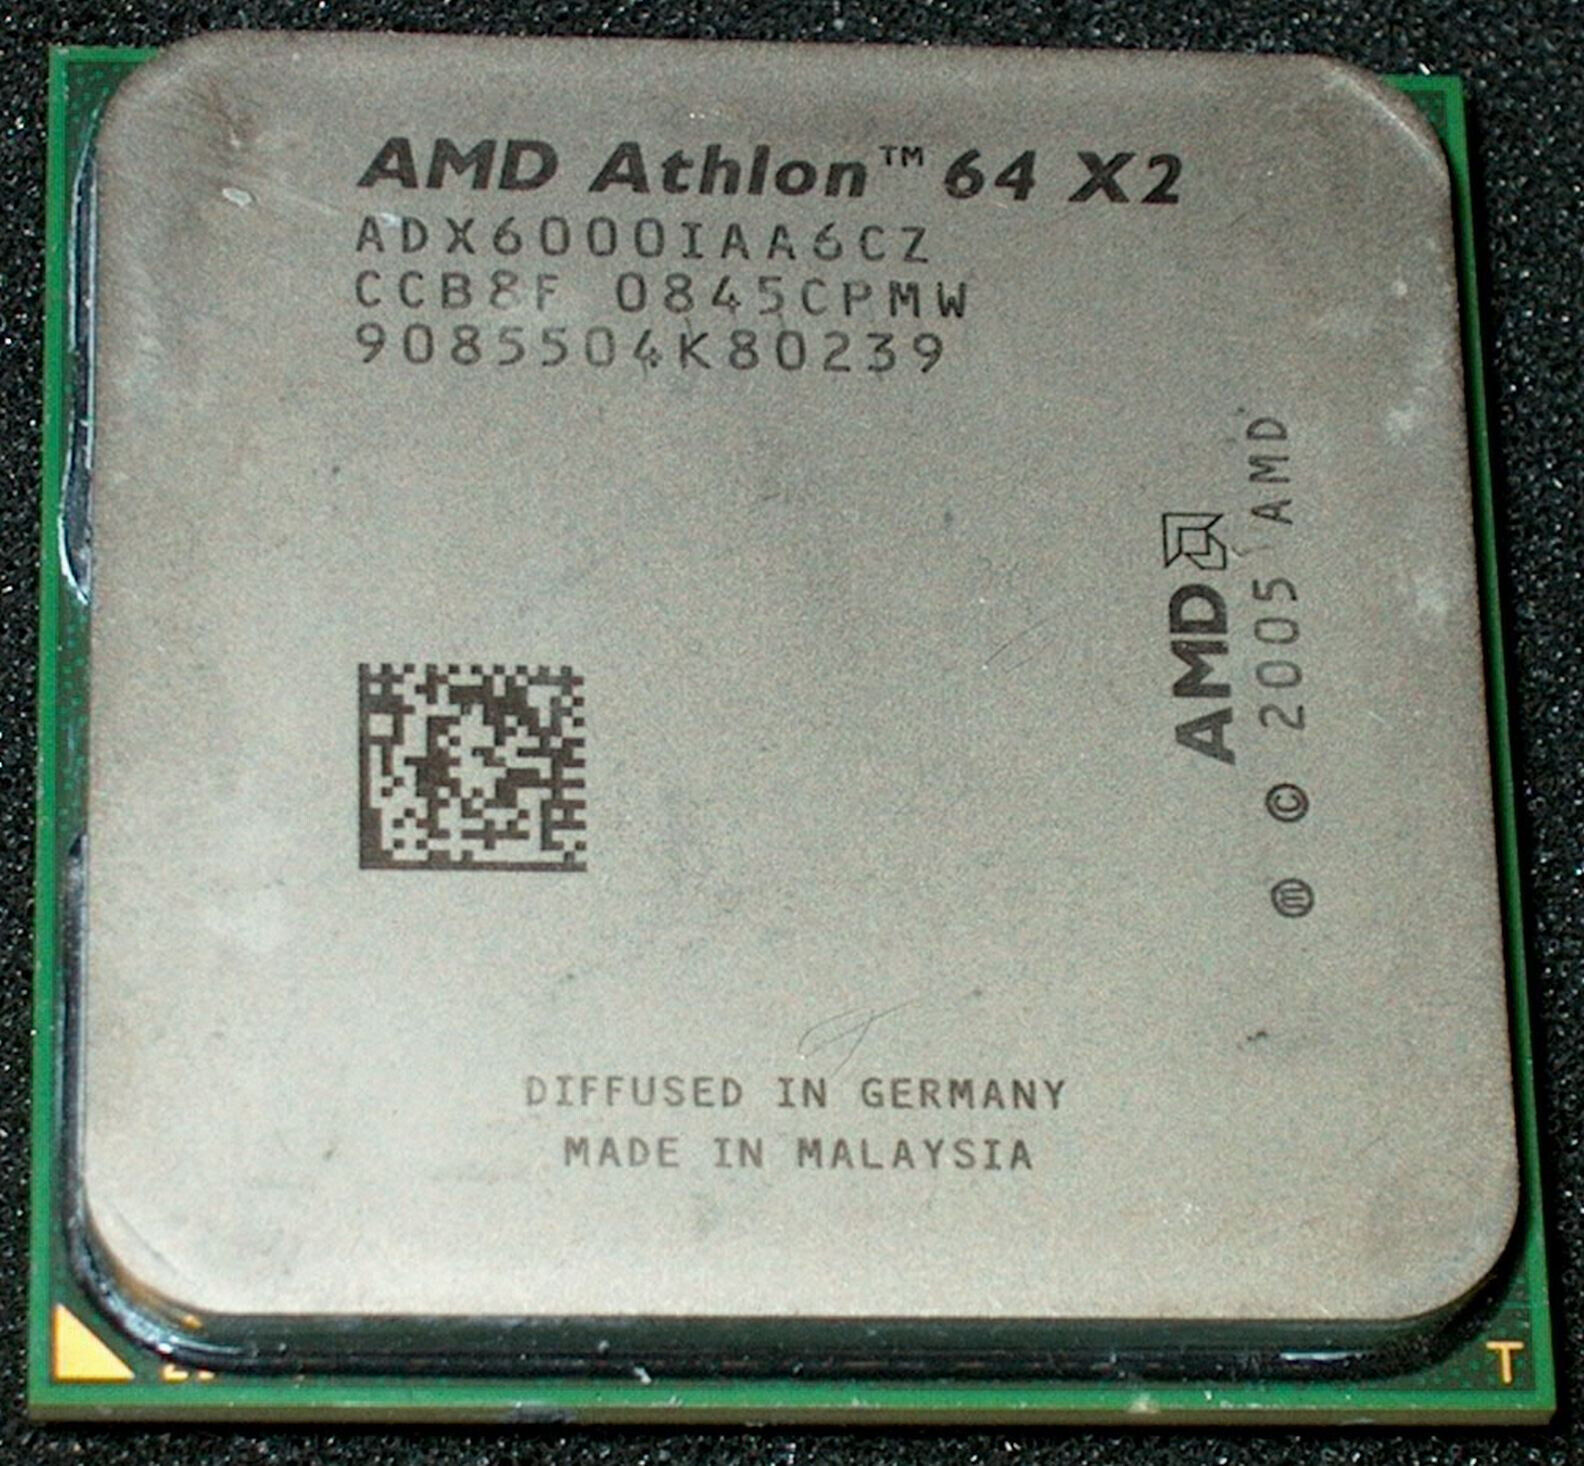 AMD Athlon 64 X 2 6000+ 3.0GHz Dual-Core Processor, ADX6000IAA6CZ, AM2-US SELLER